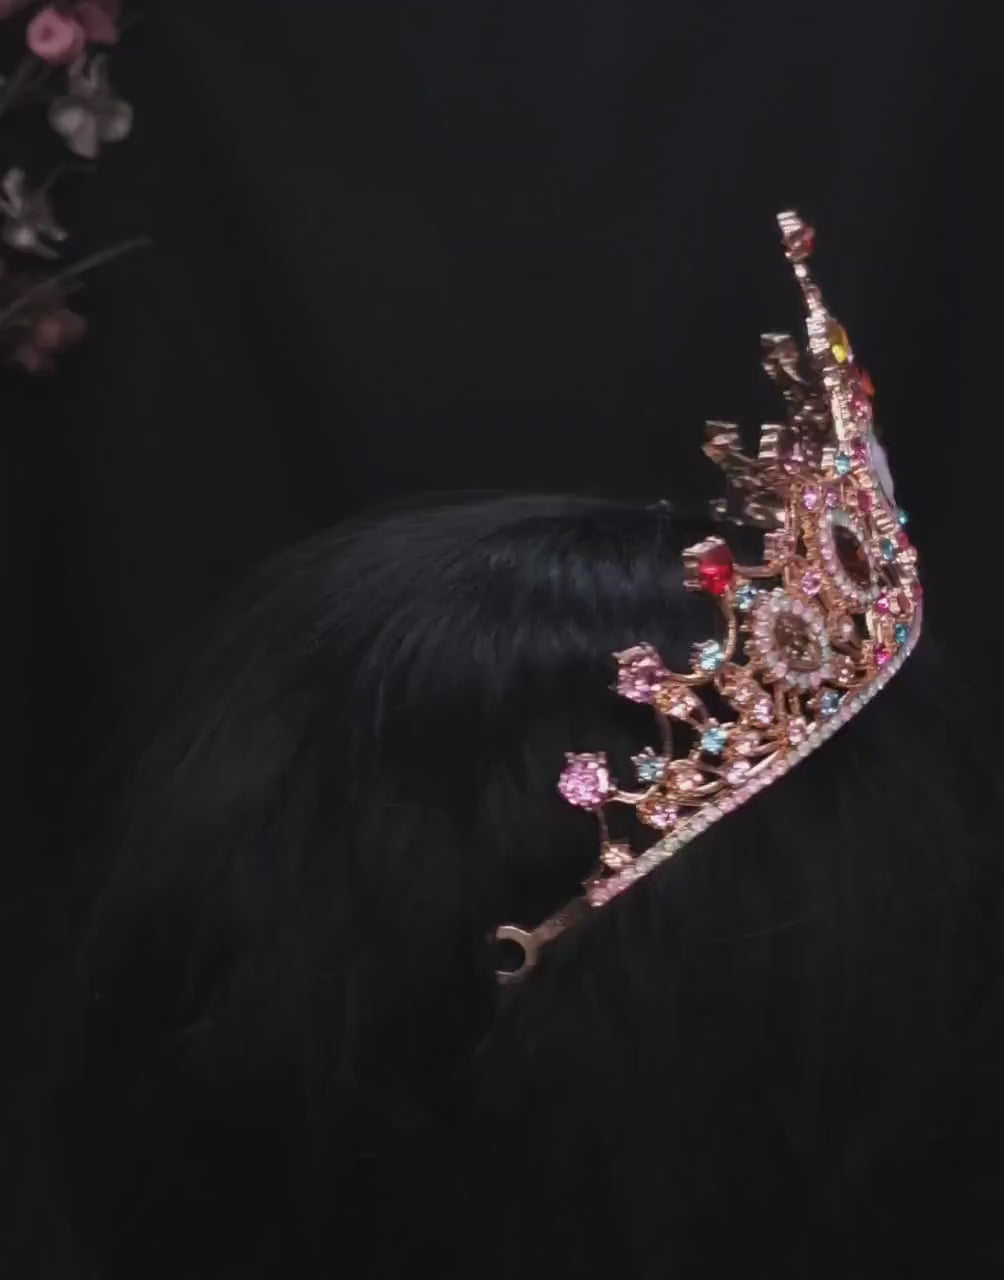 Multi Color Tiara Crown Pastel Headdress Queen tall diadem bridal Real Metal cosplay 